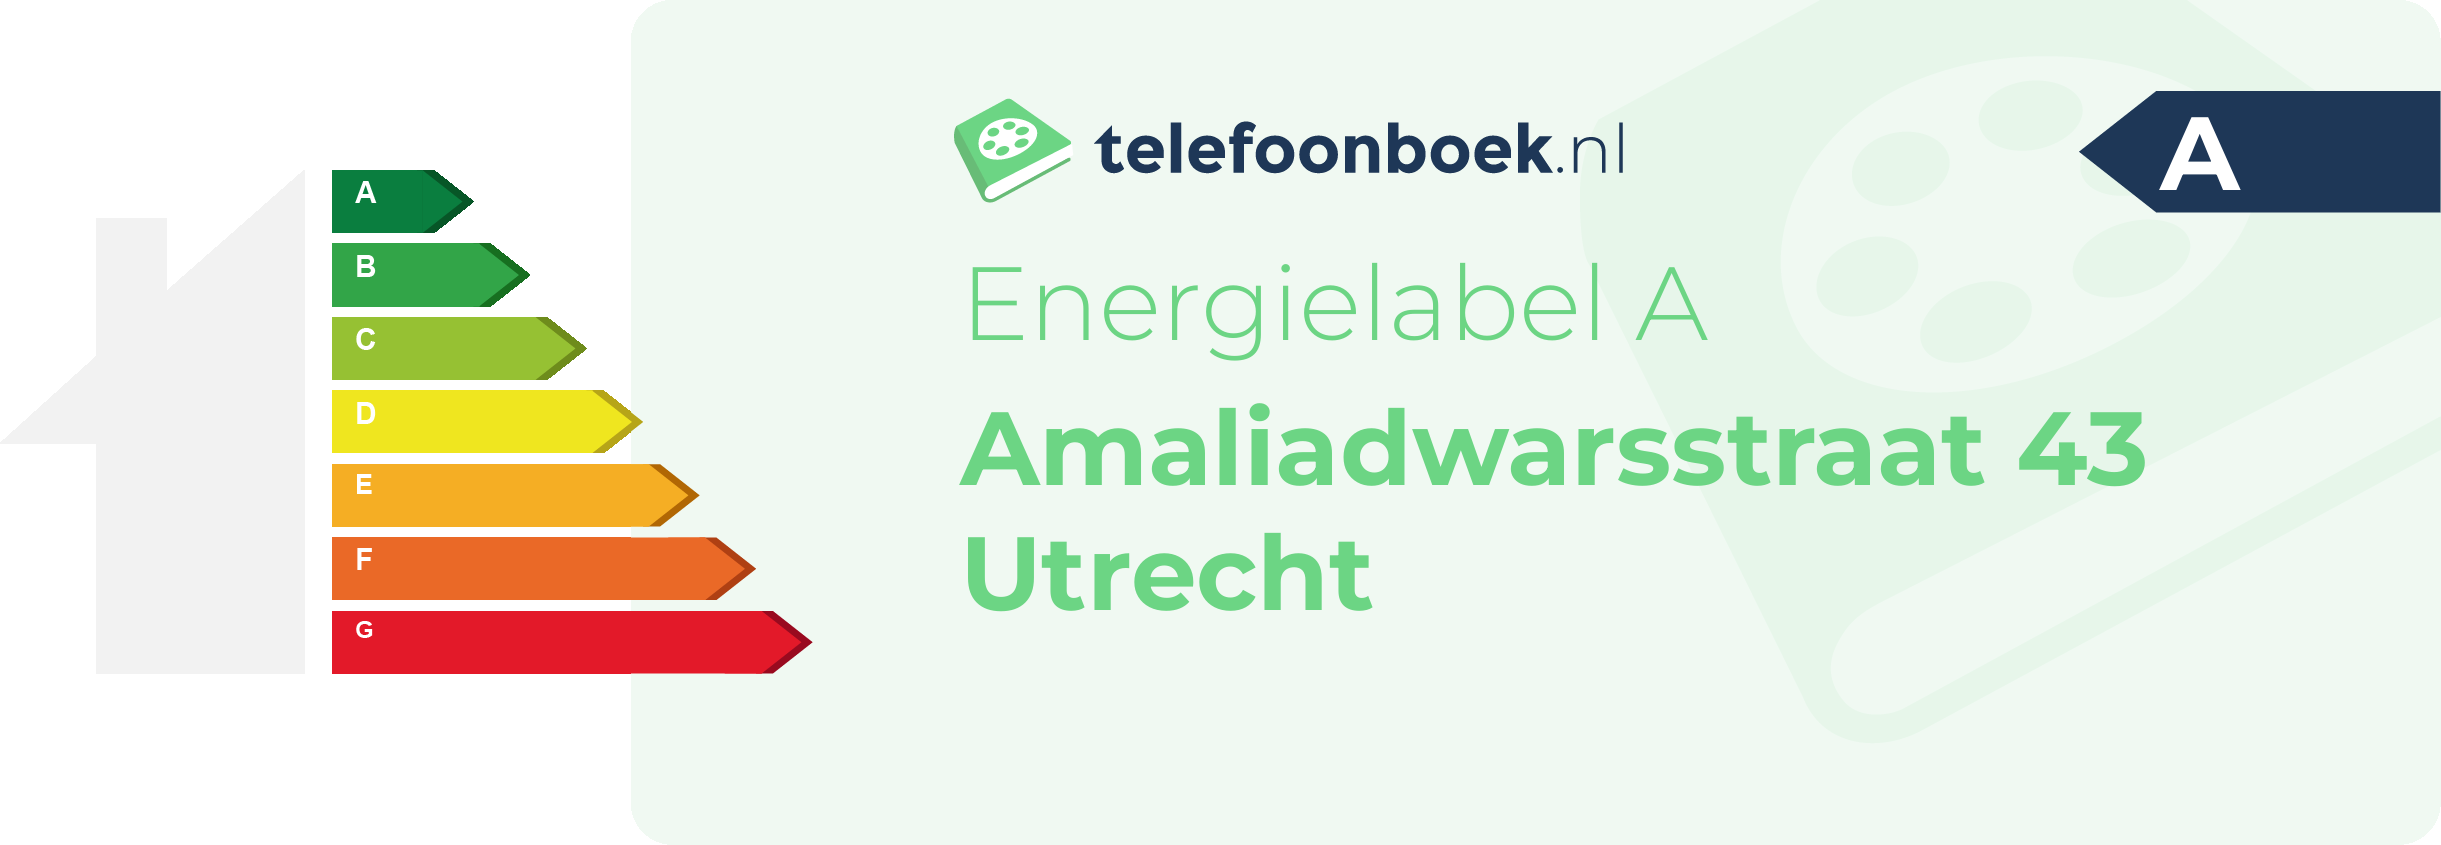 Energielabel Amaliadwarsstraat 43 Utrecht